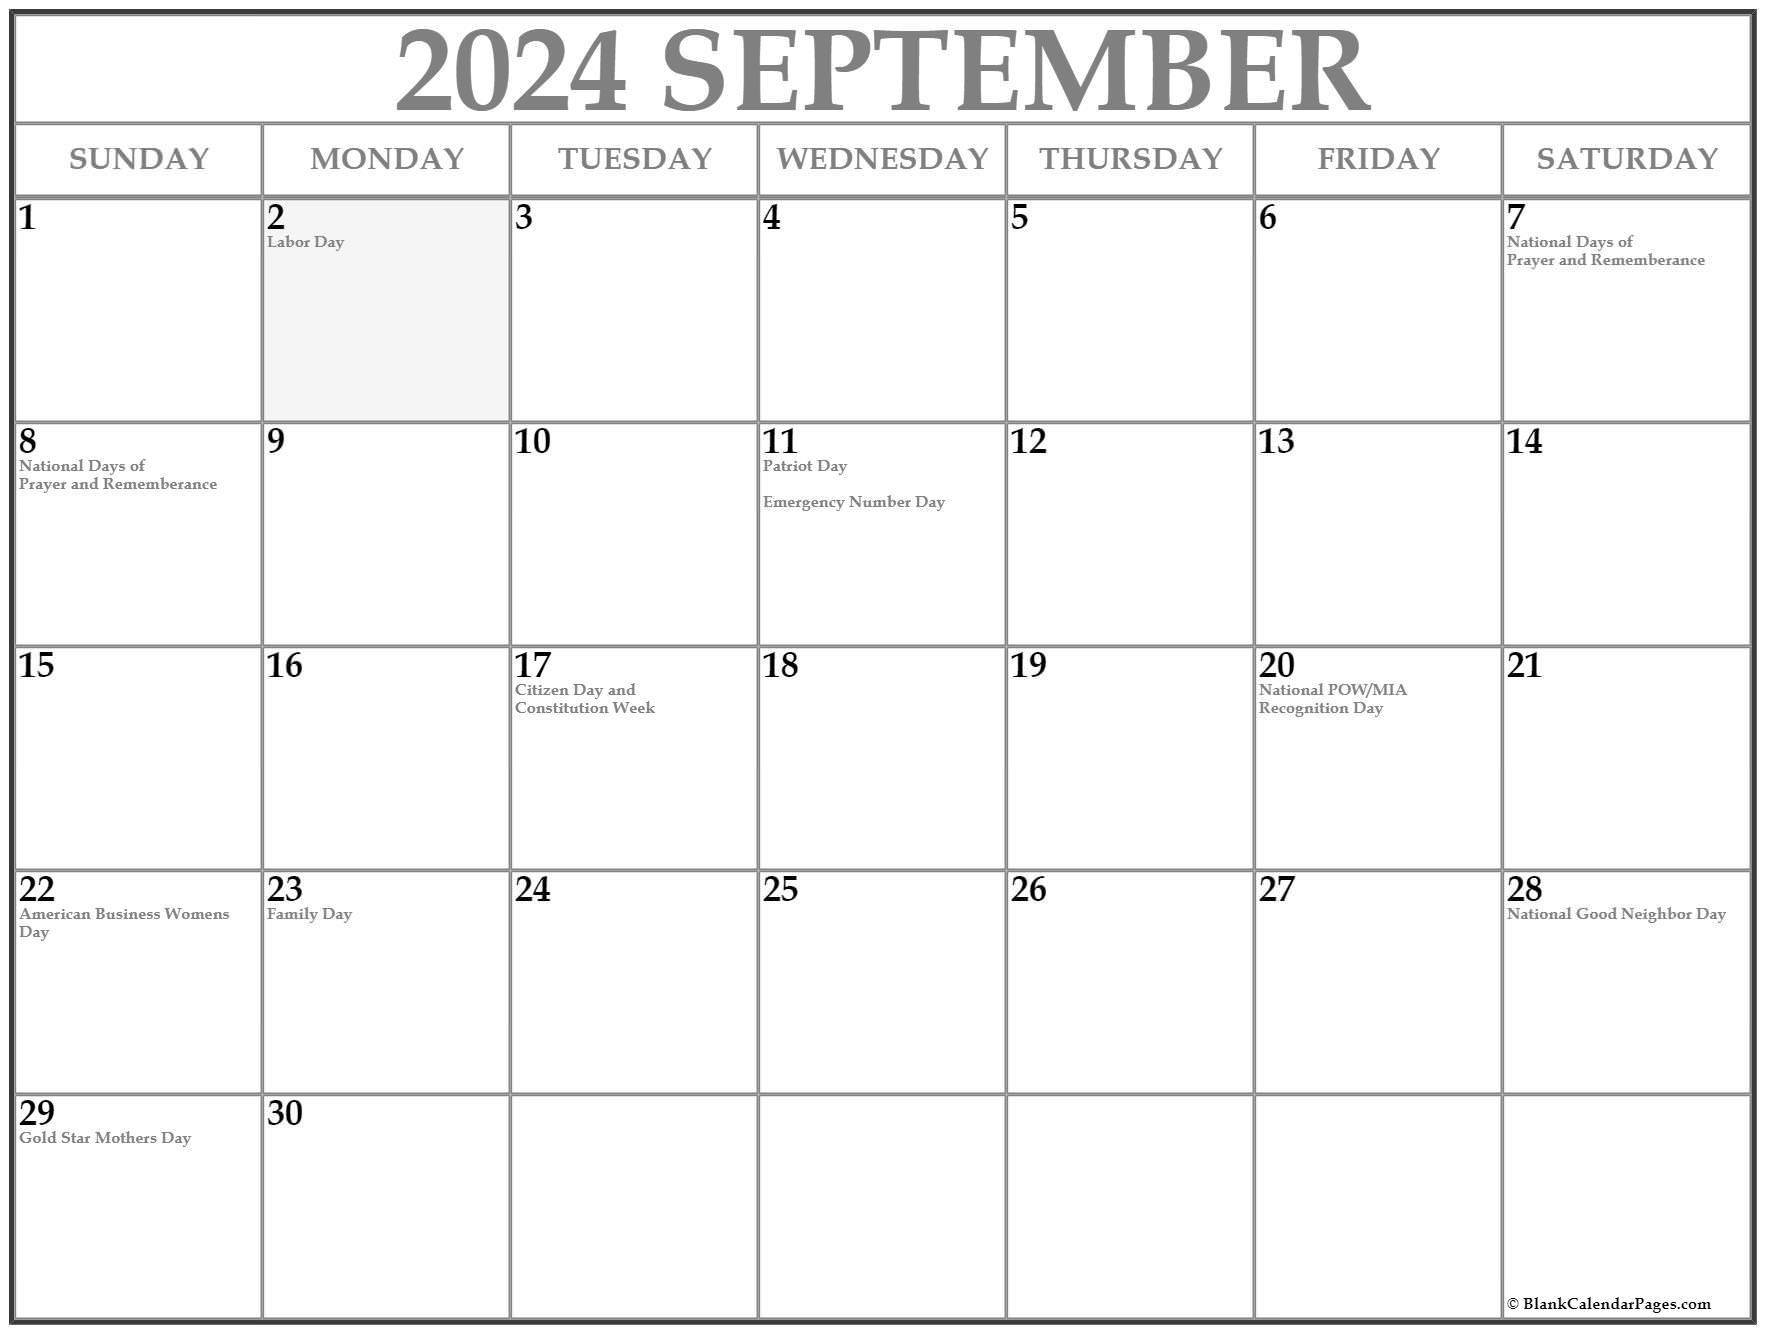 September 2024 with holidays calendar